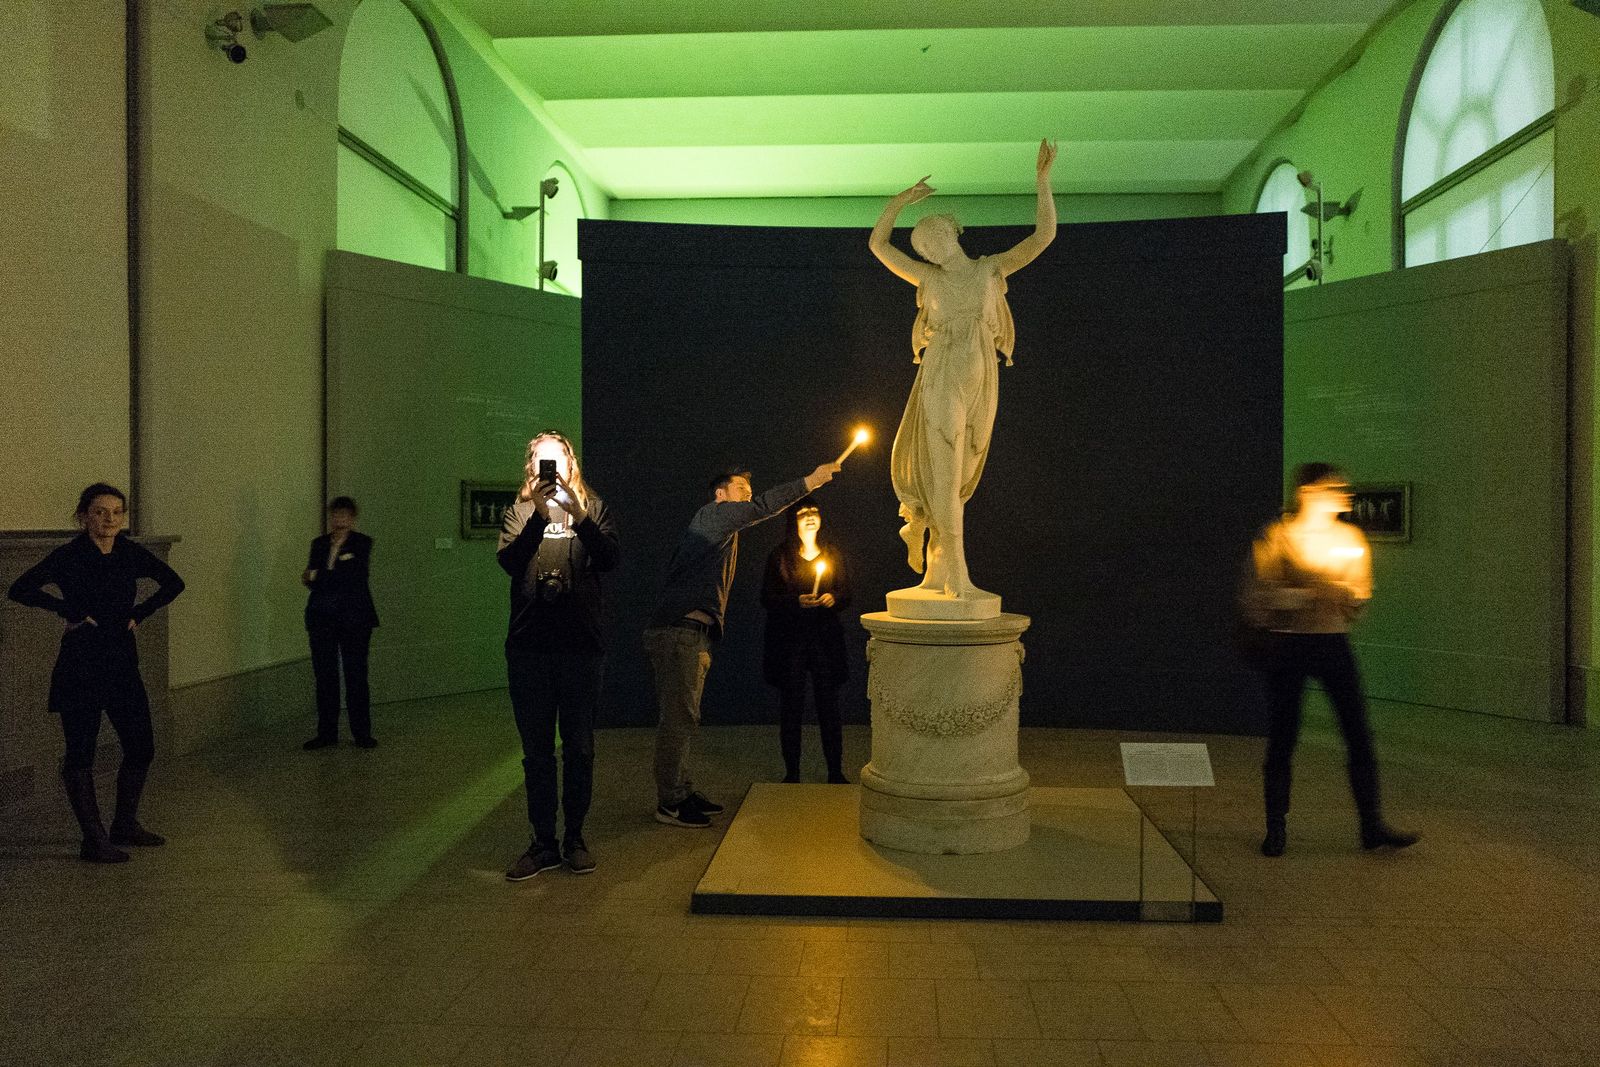 Das Kerzenlicht eröffnet neue Perspektiven auf den Marmor. Foto: Christoph Neumann, www.christoph-neumann.com